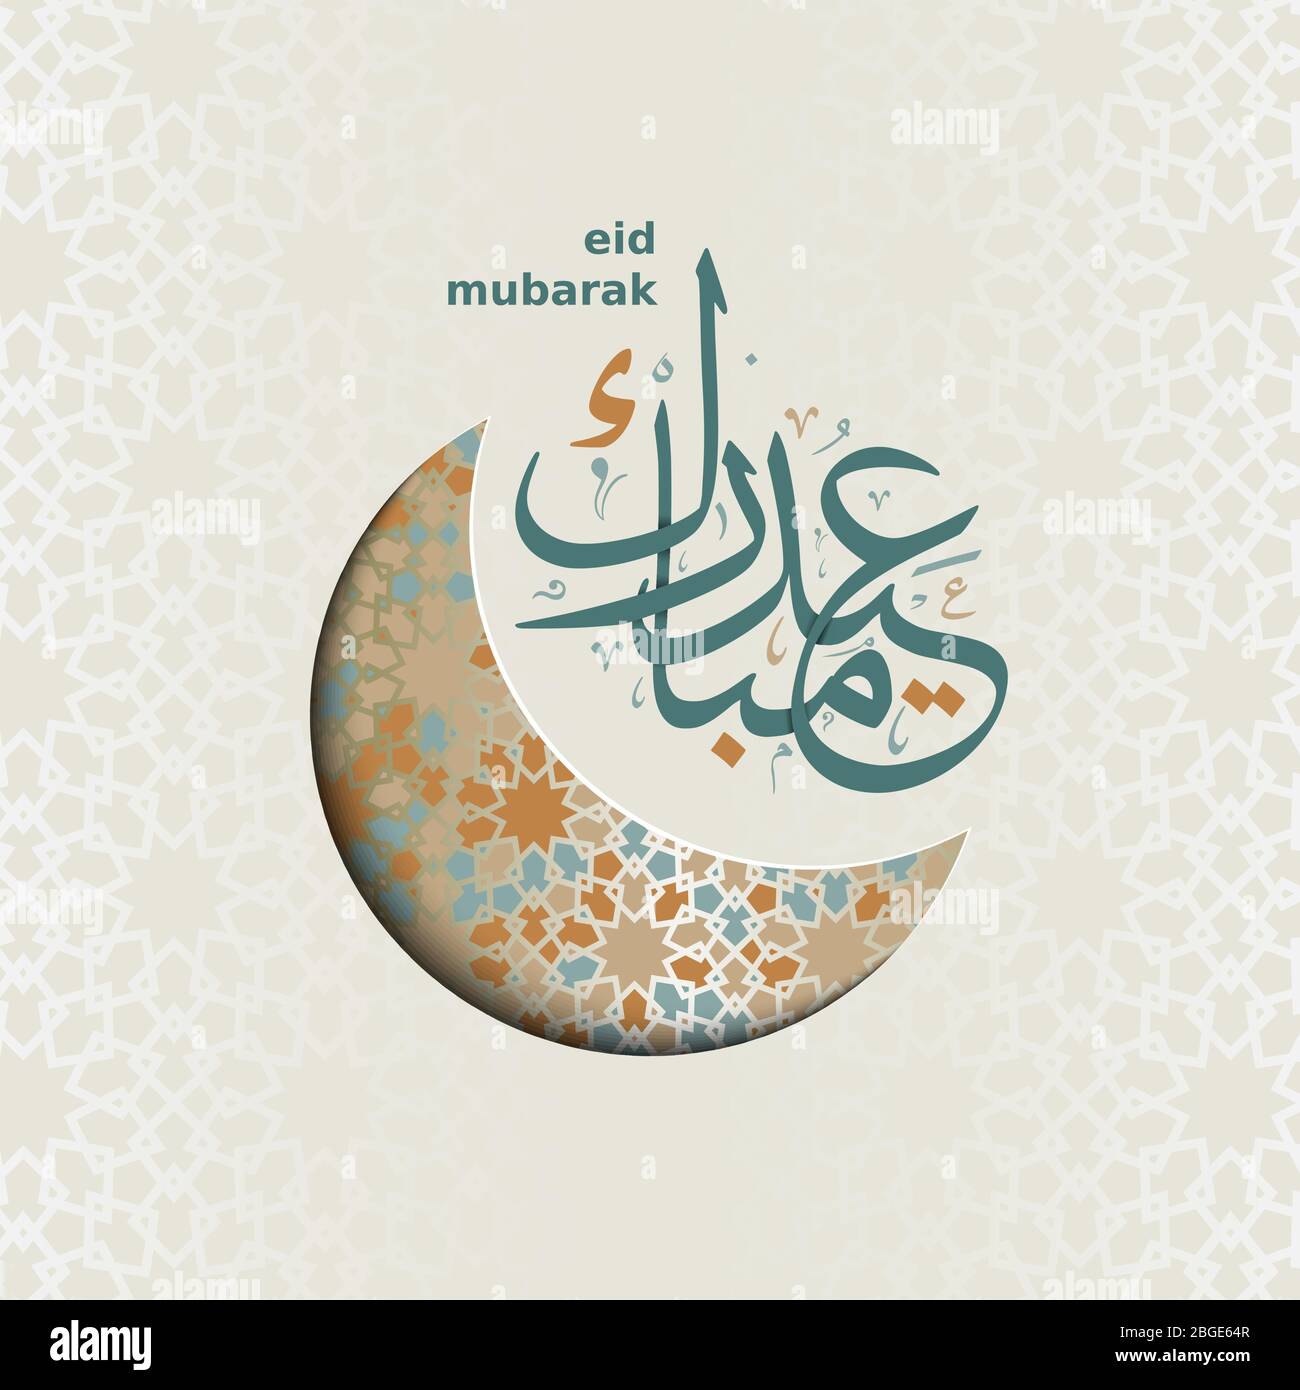 Papier geschnitten Eid Mubarak Mond. Vektor-Grußkarte mit Halbmond-Farbdesign und Eid Mubarak Kalligraphie. Stock Vektor